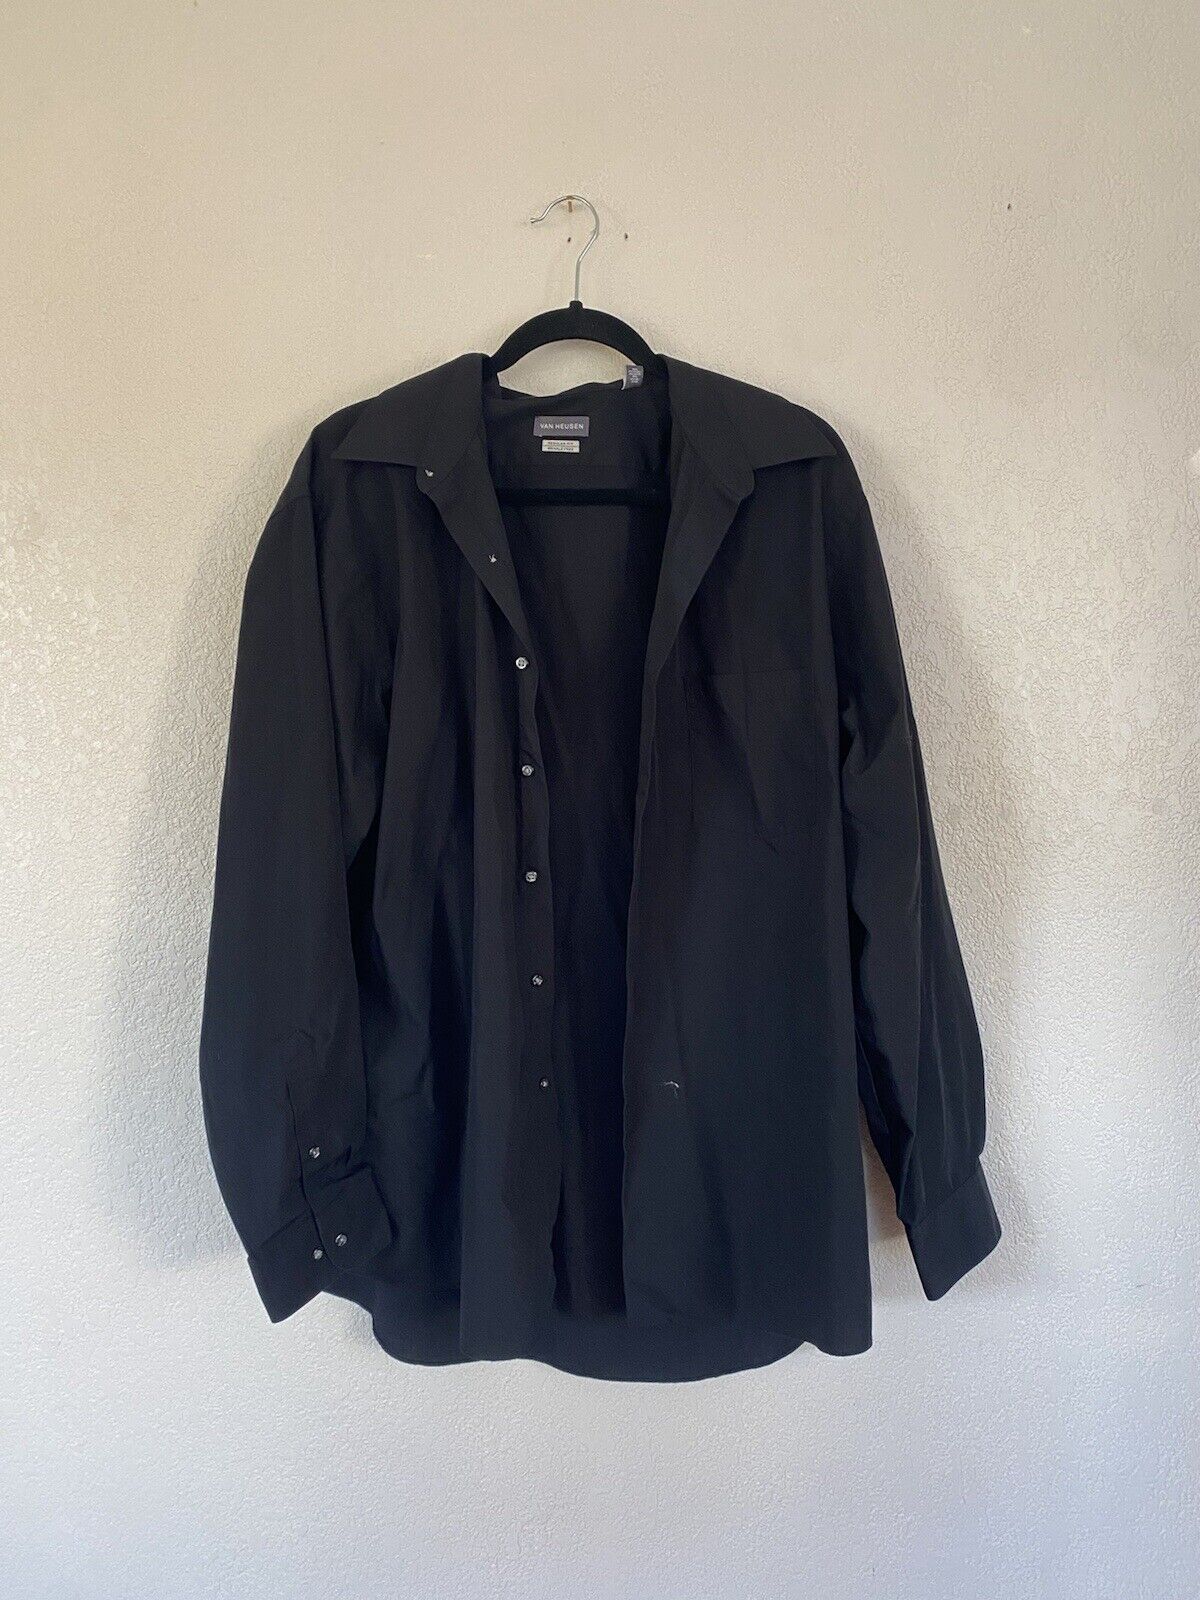 Black Button Down Shirt - Van Heusen - Men's XL # 2163